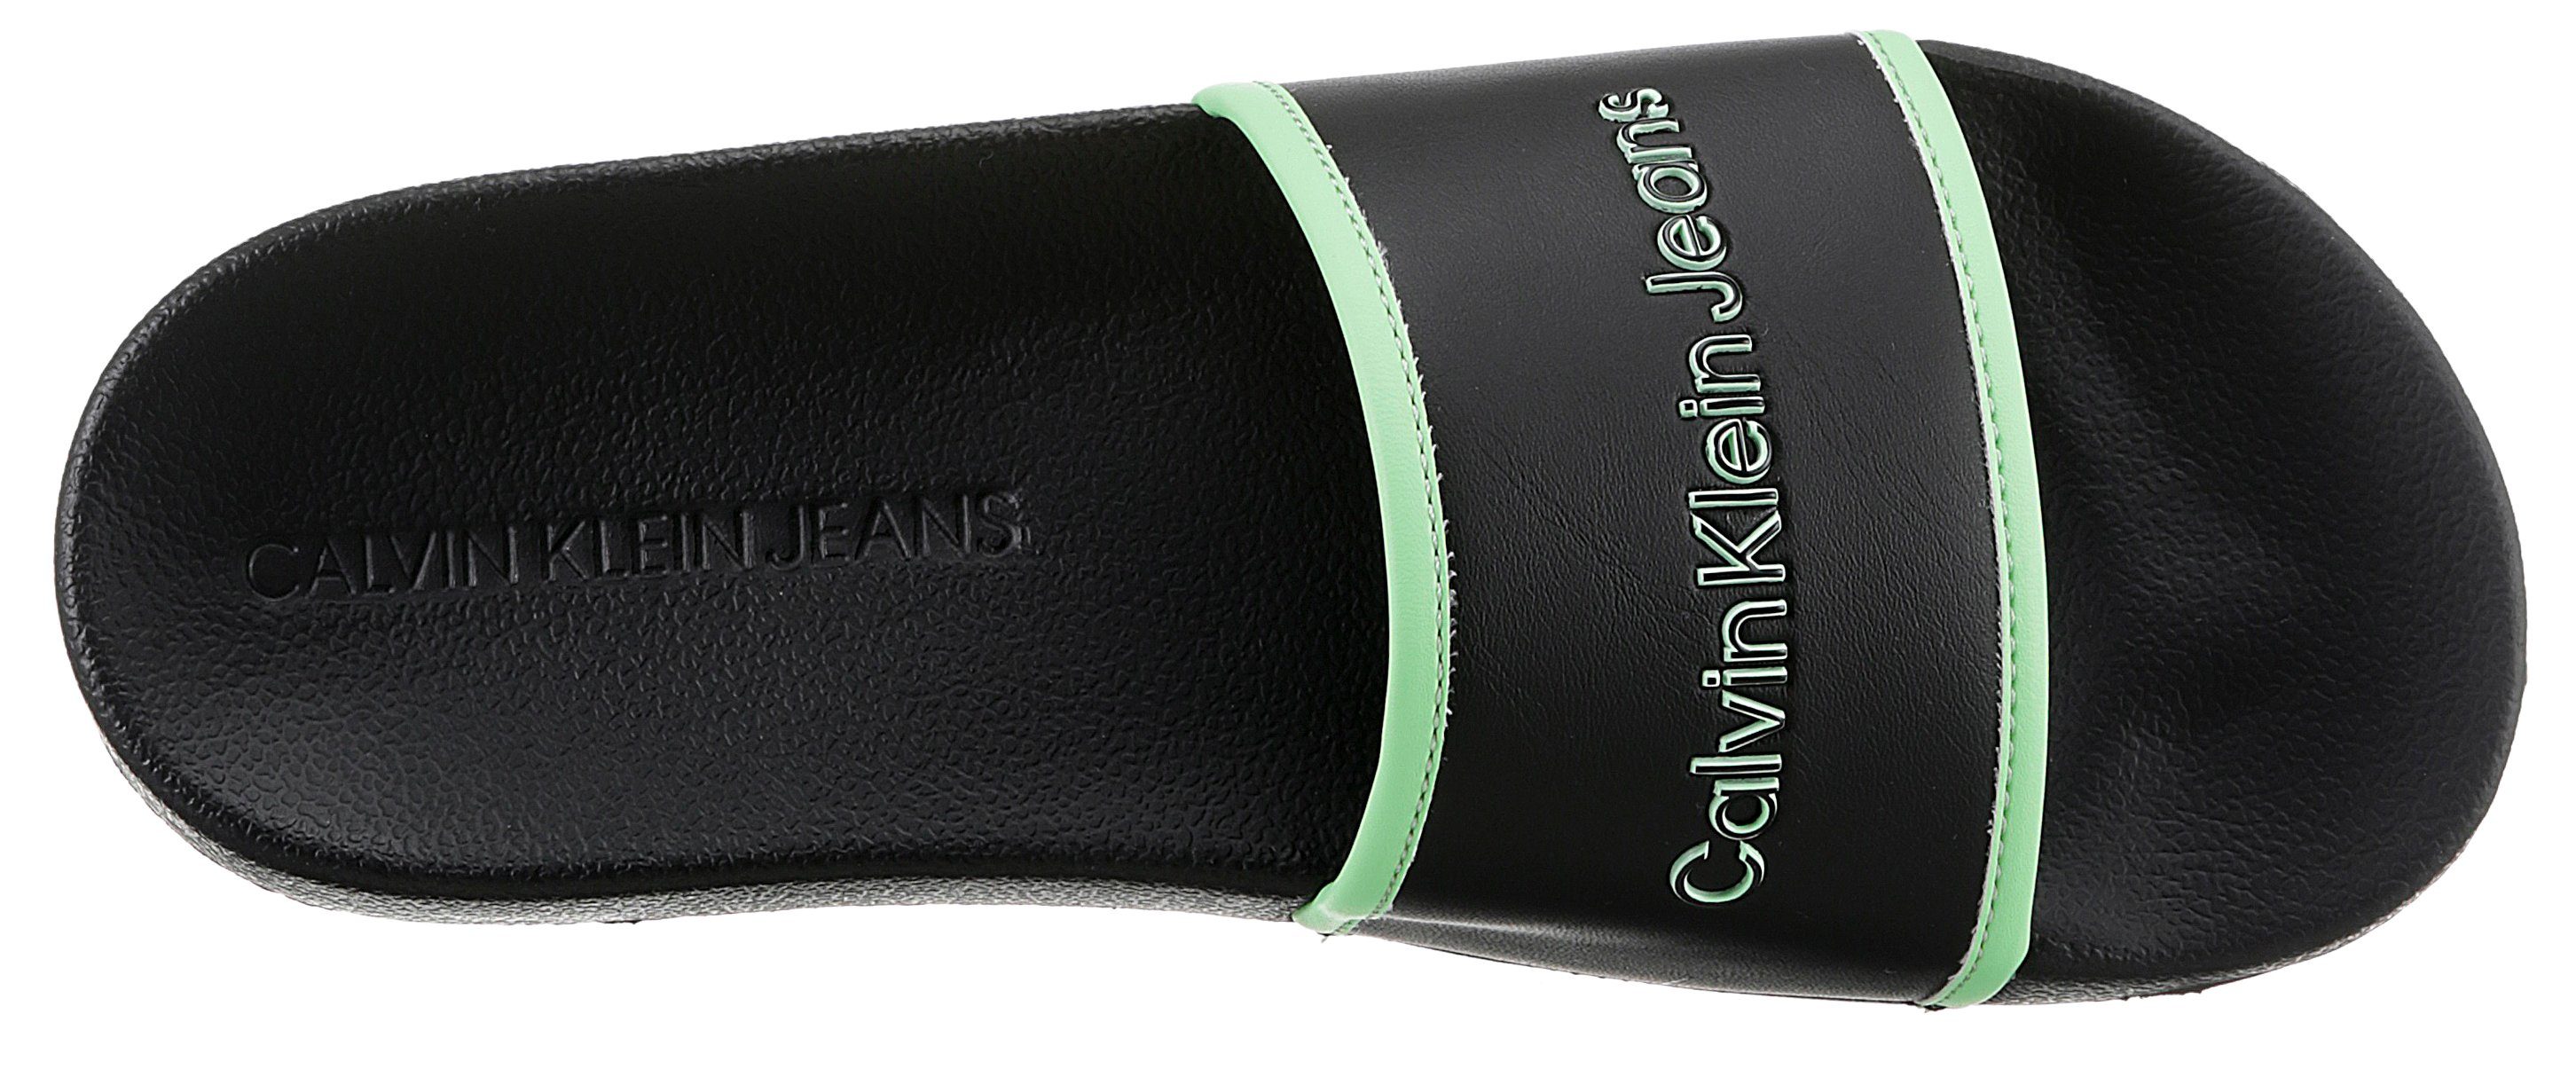 Calvin Klein *I in Badepantolette Jeans FANNY bequemer 5A Form schwarz-mint